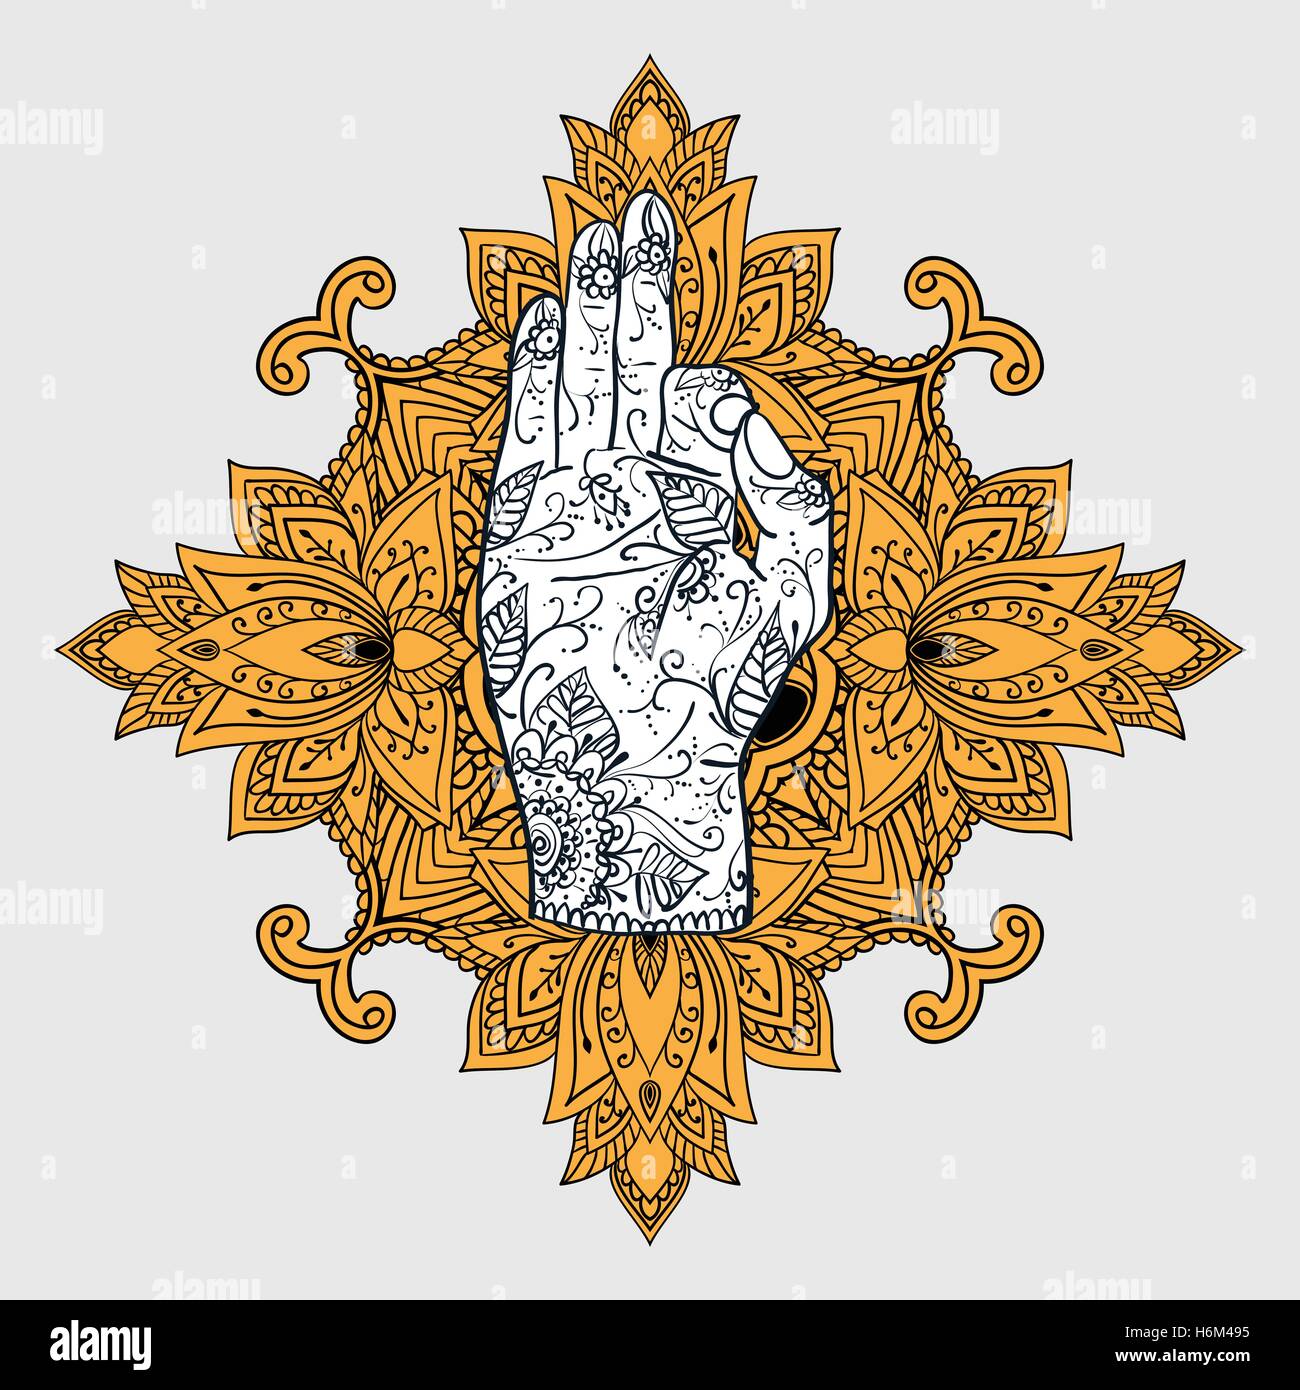 Elegante Ornamente Spitze Mandala. Jnana-Mudra. Alte dekorative Ornament-Muster. Handgezeichnete Islam, Arabisch, Indisch, osmanischen moti Stock Vektor